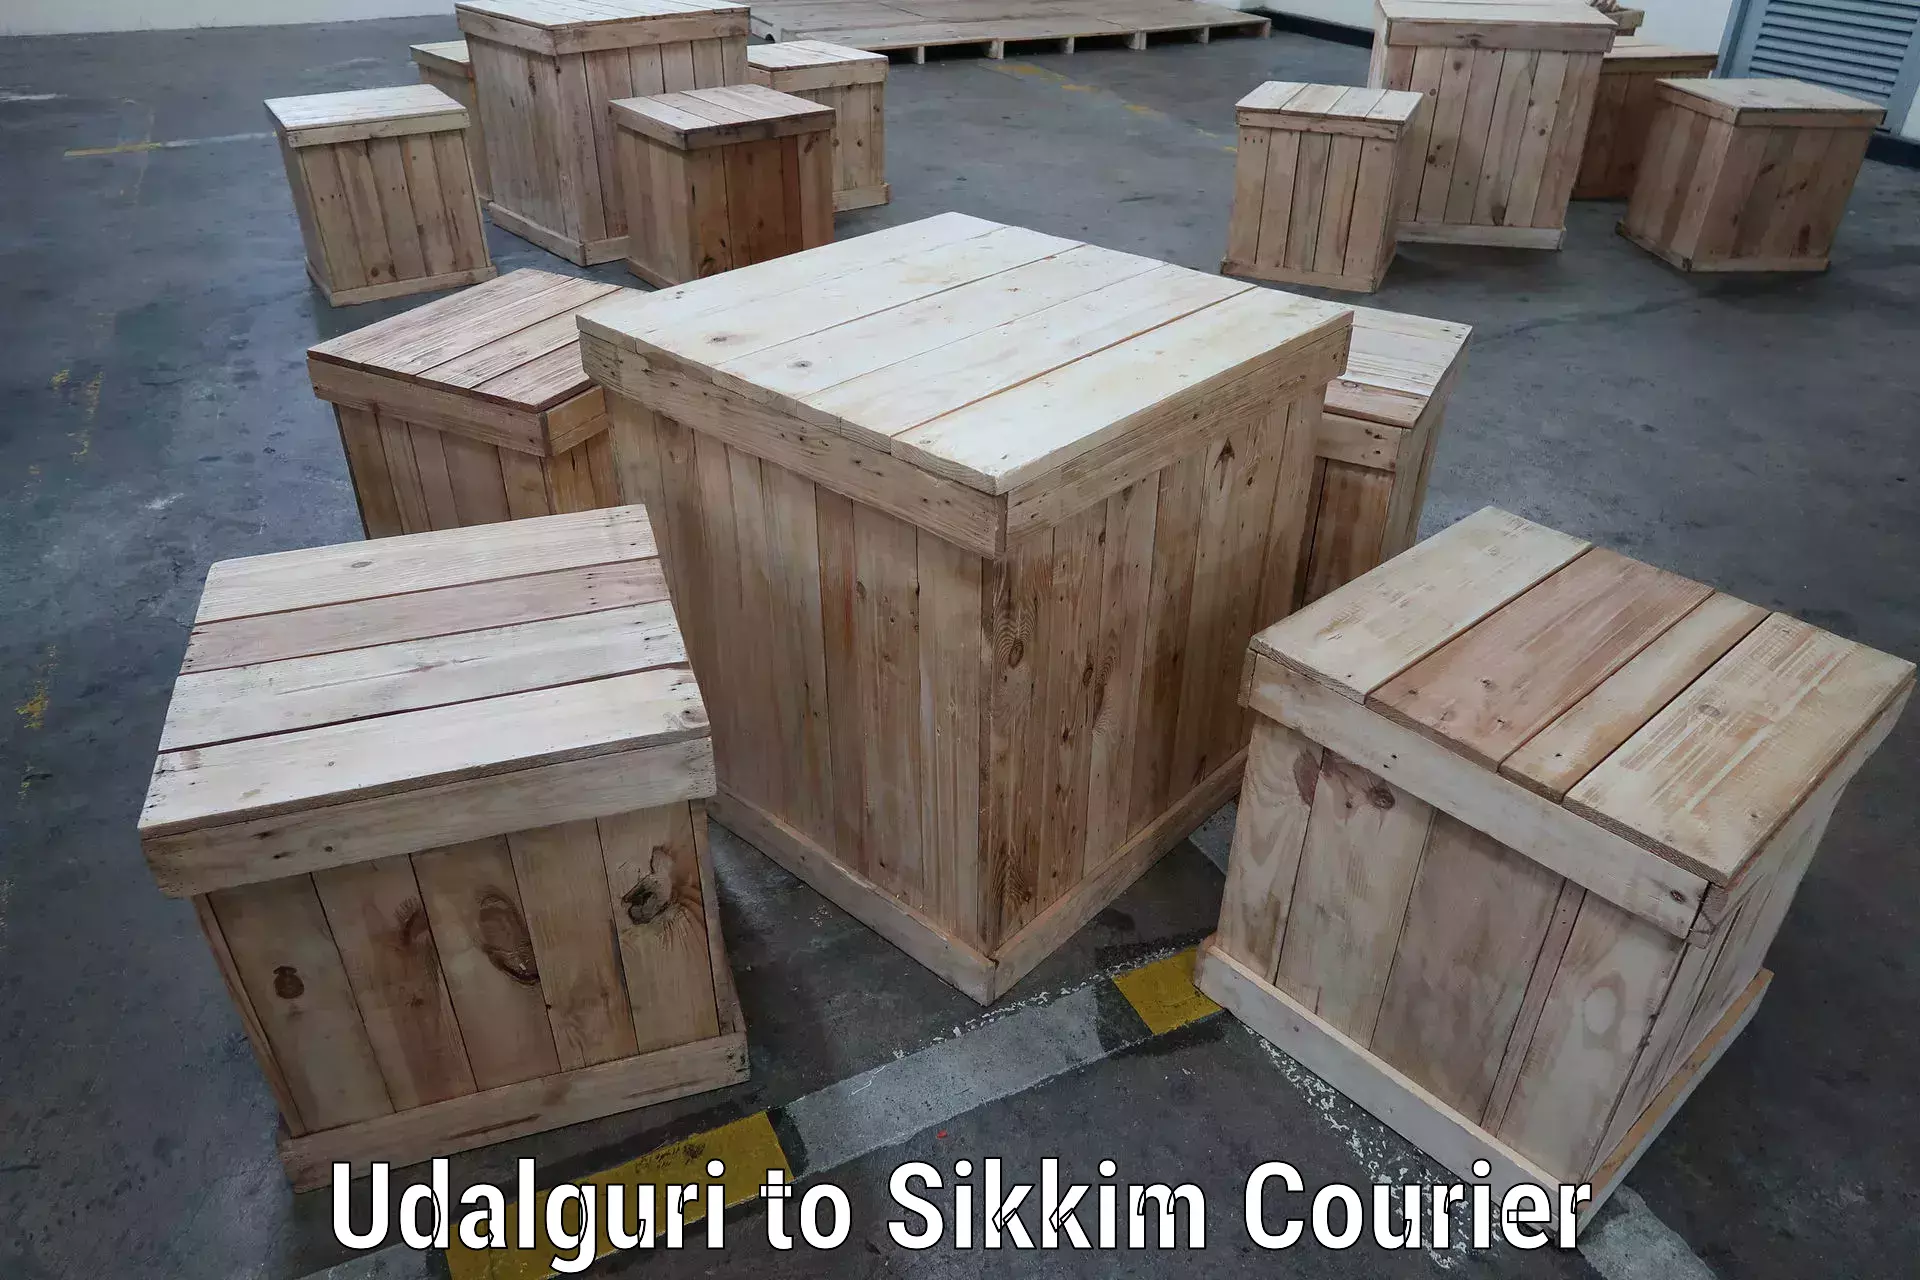 Logistics service provider Udalguri to East Sikkim